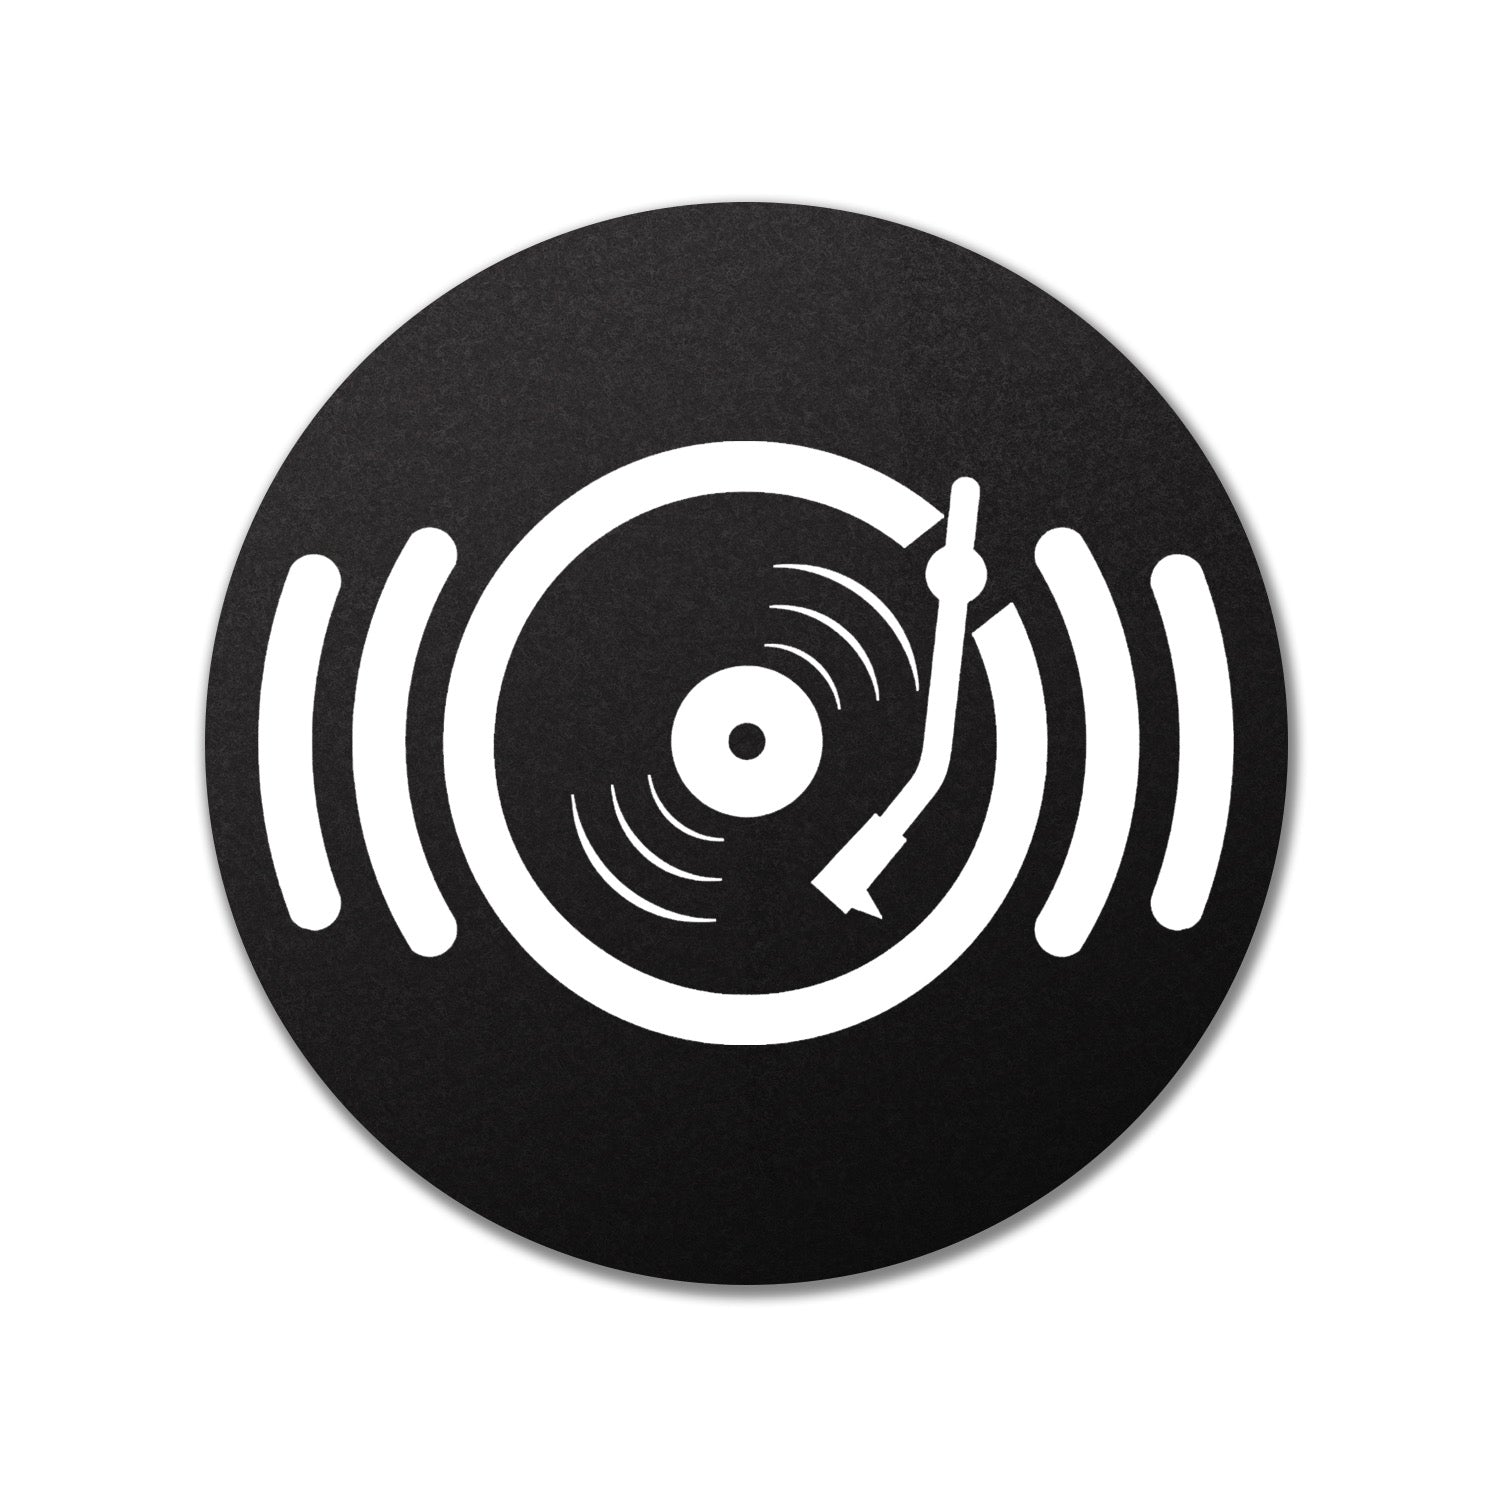 Sharptone Records - Record Player Slip Mat